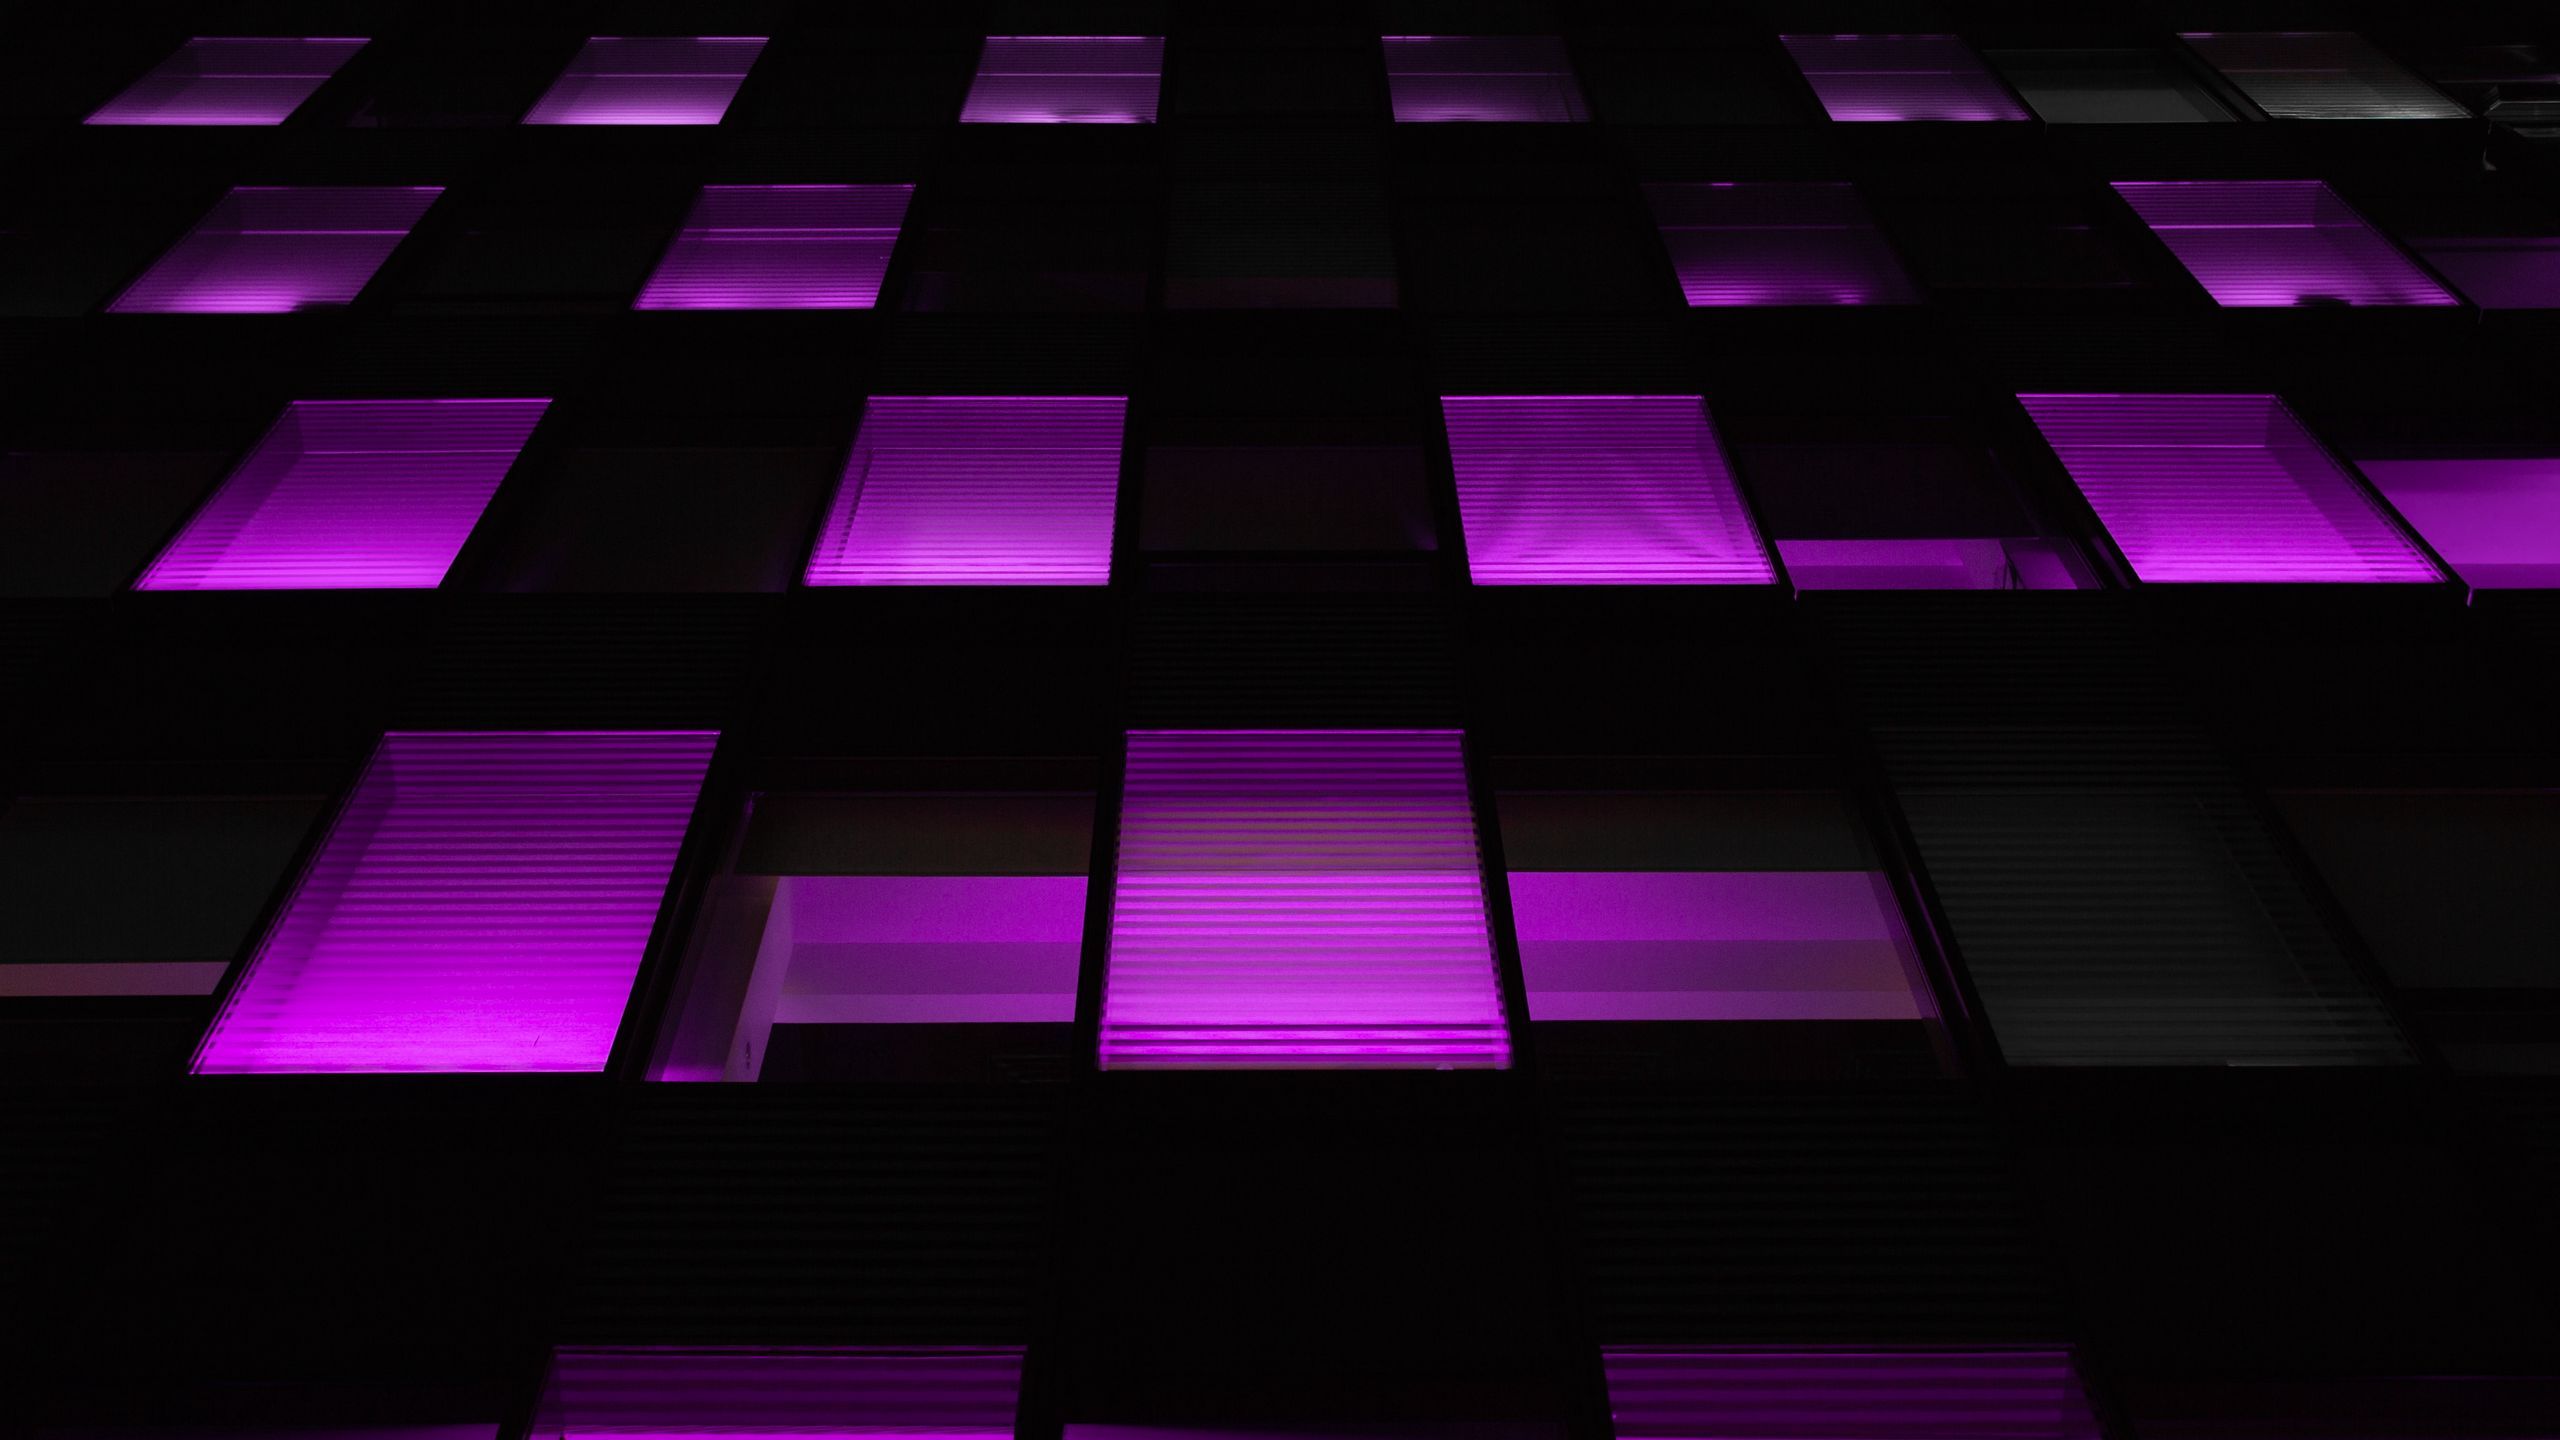 Download wallpaper 2560x1440 windows, dark, purple, backlight, neon widescreen 16:9 HD background